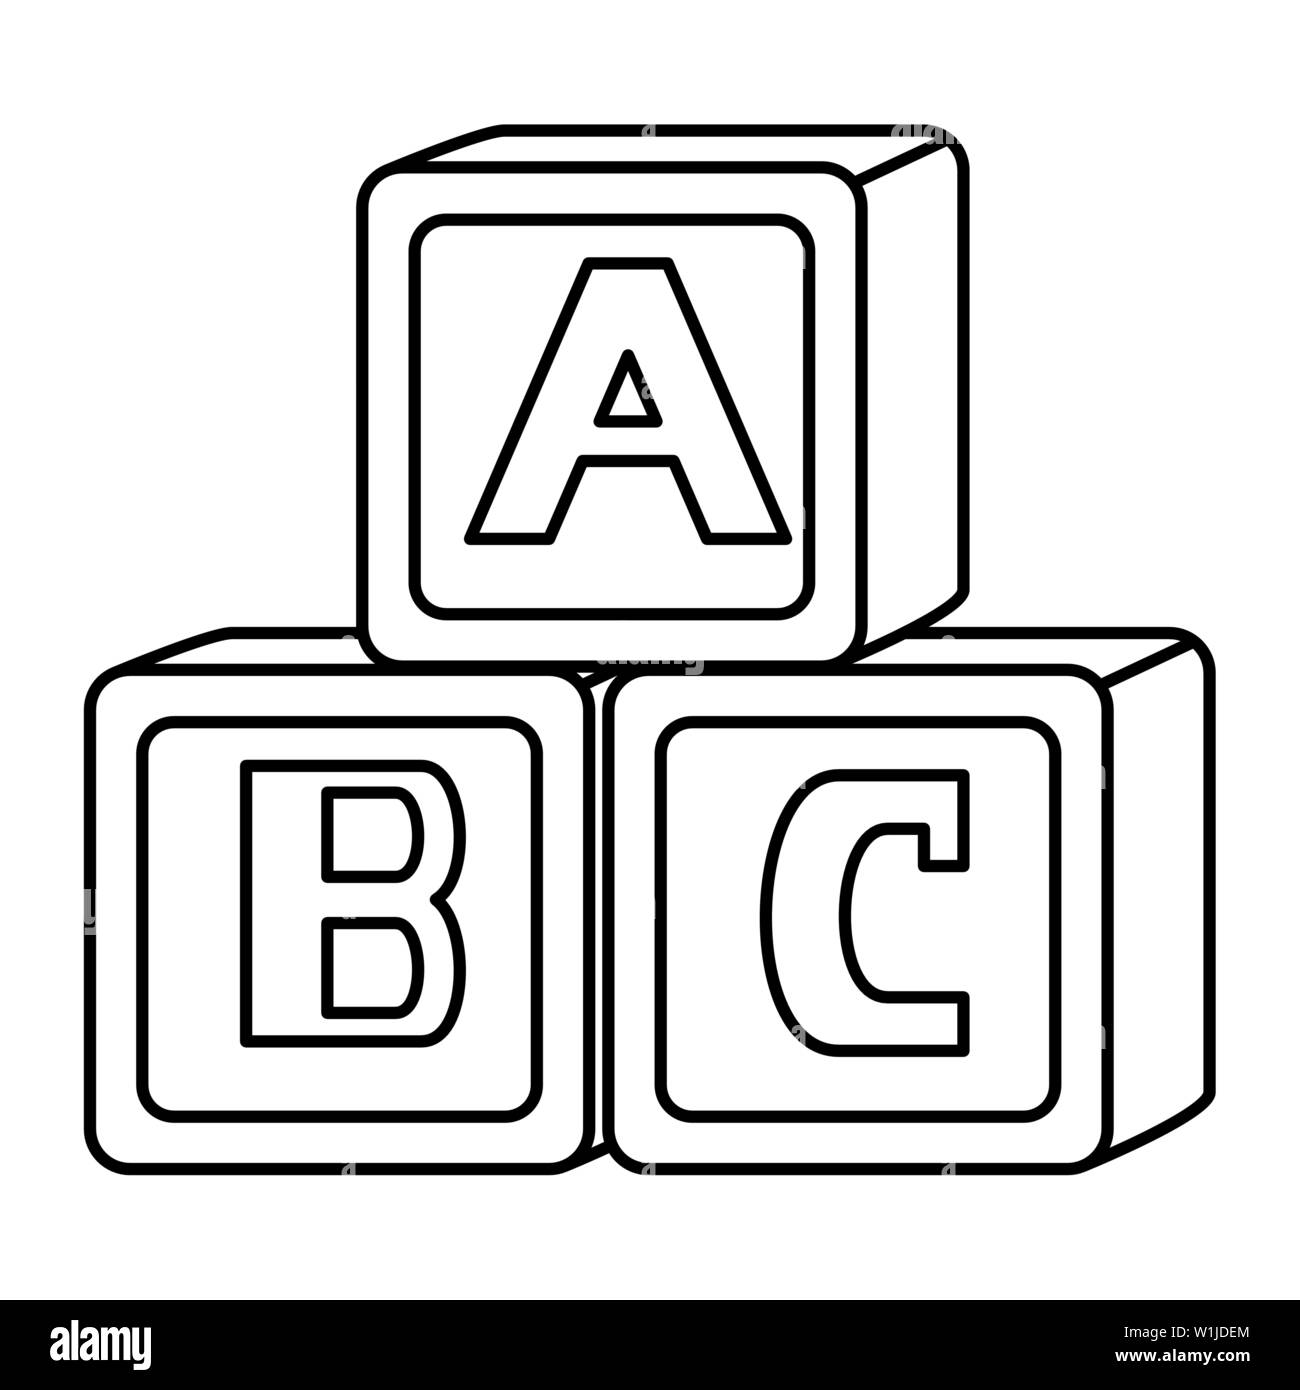 letter block clipart black and white